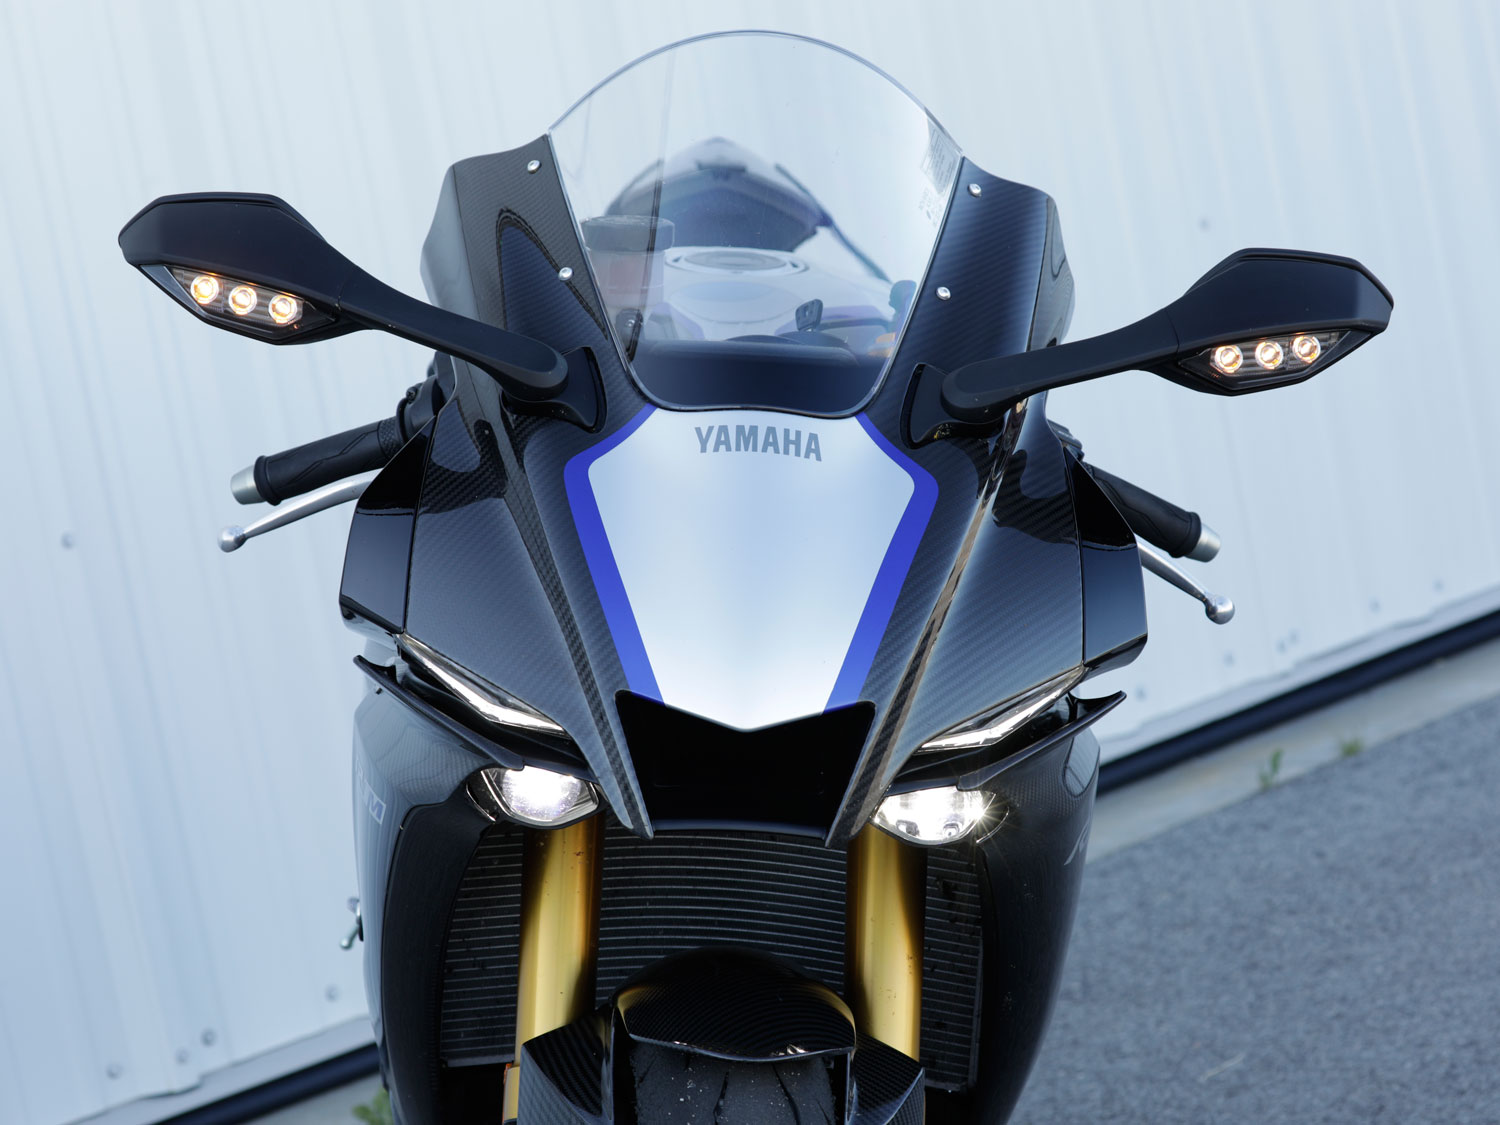 2020 Yamaha YZF-R1M Review MC Commute